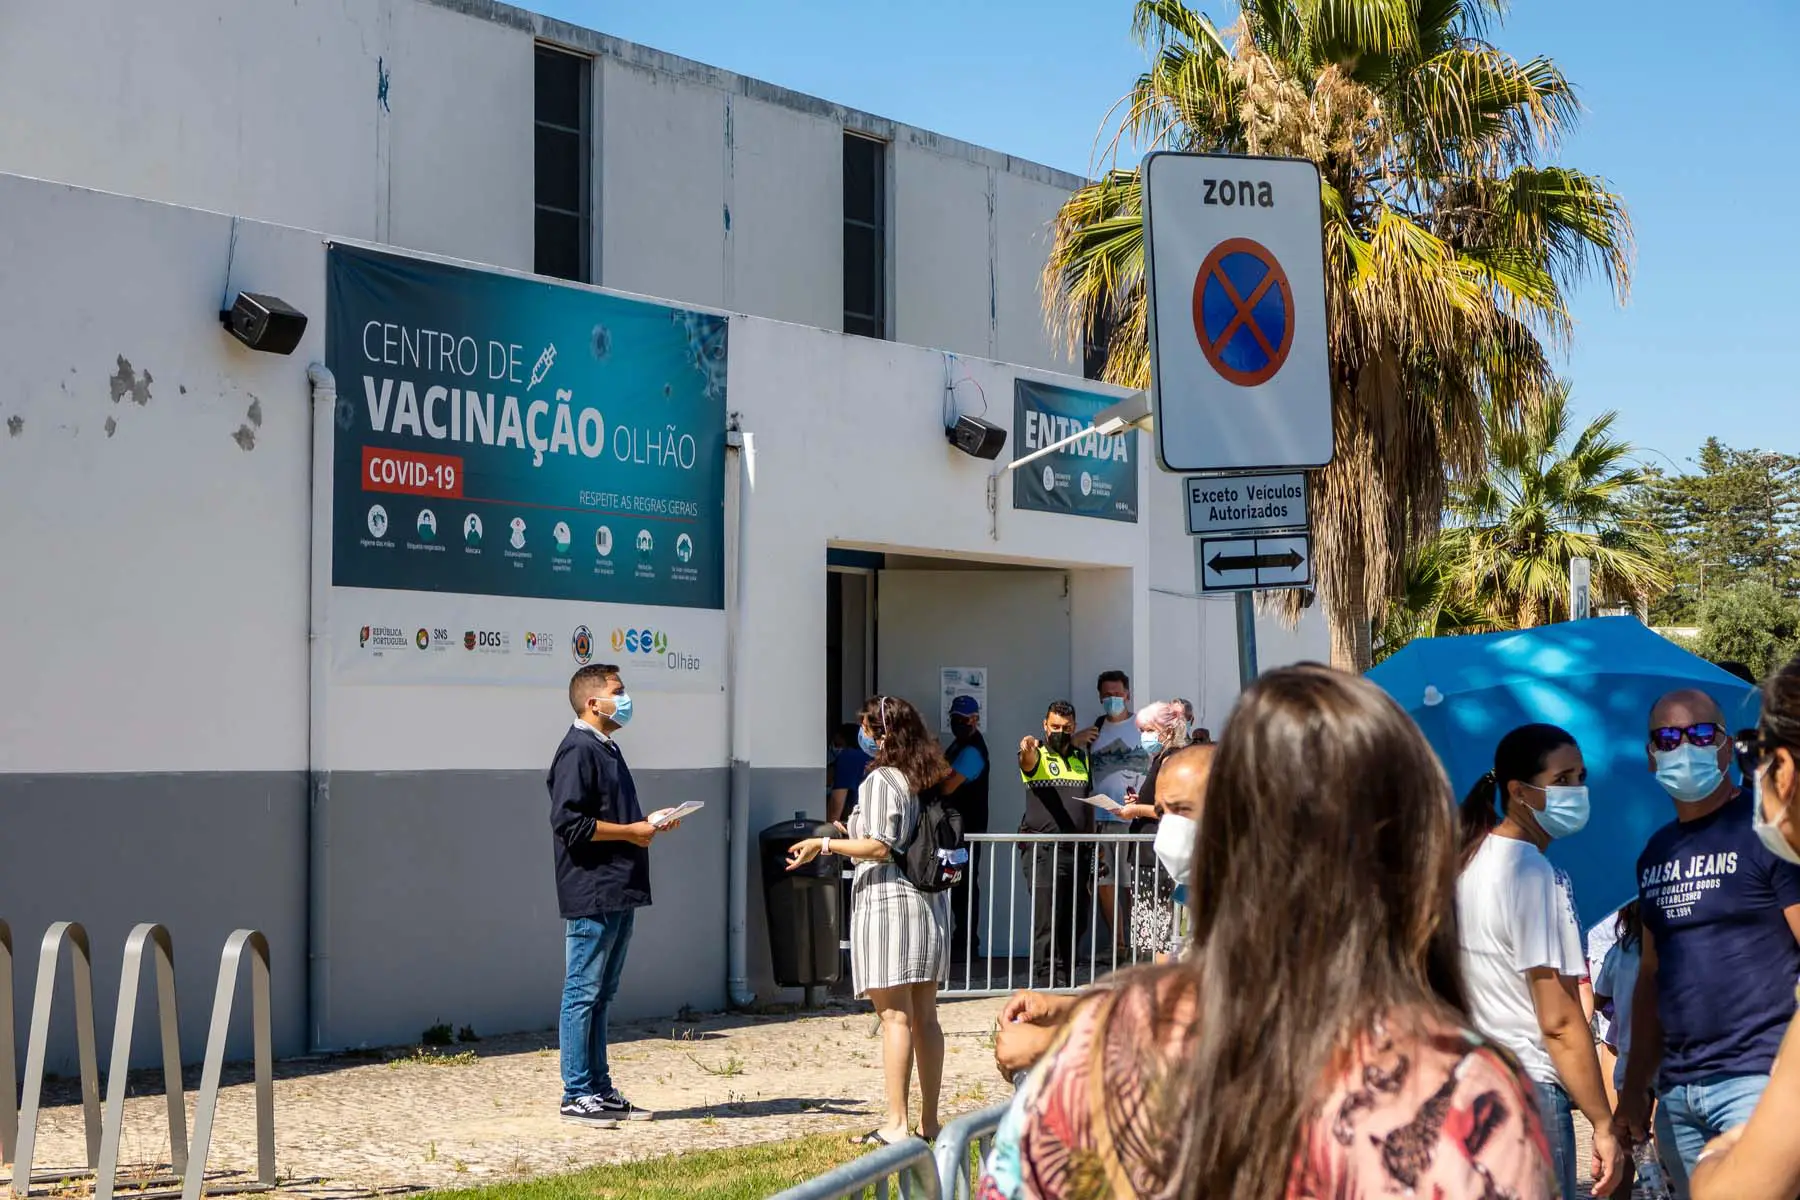 vaccination center Portugal